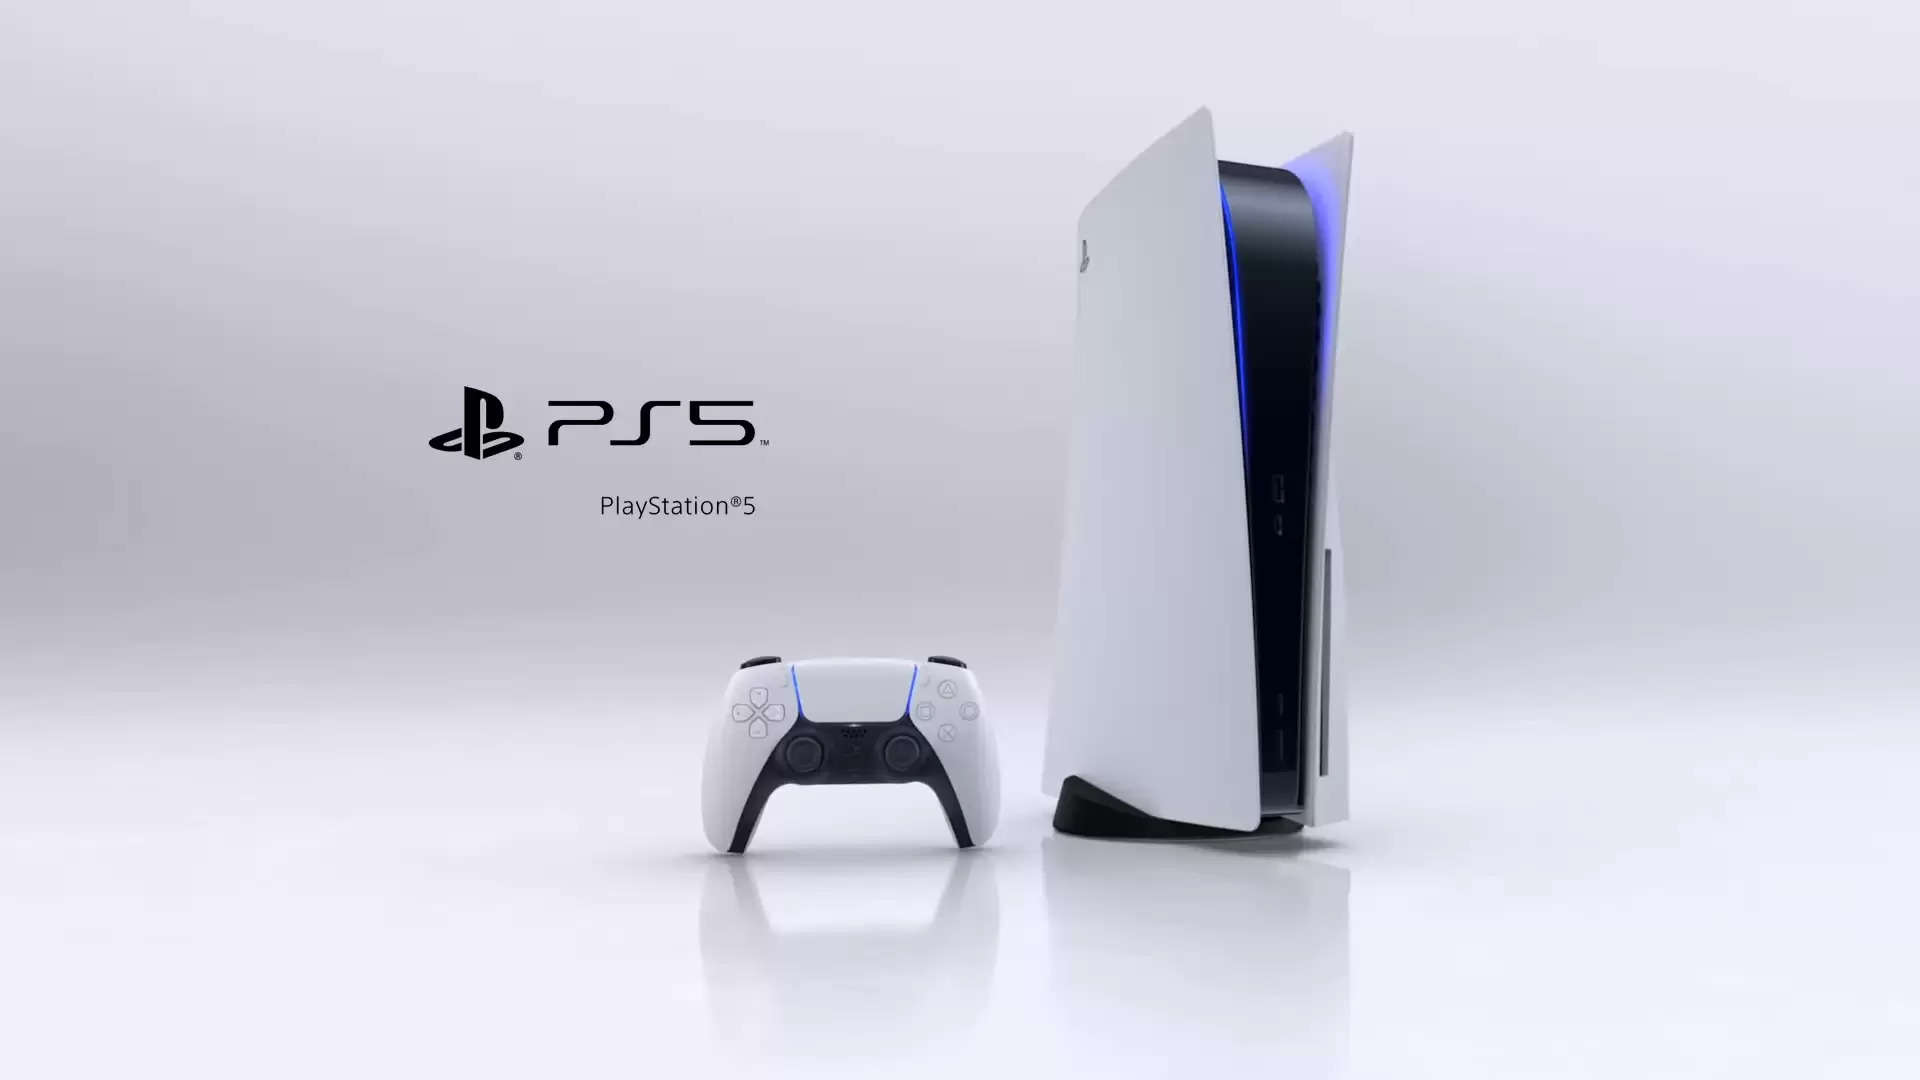 Sony’s new PS5 models